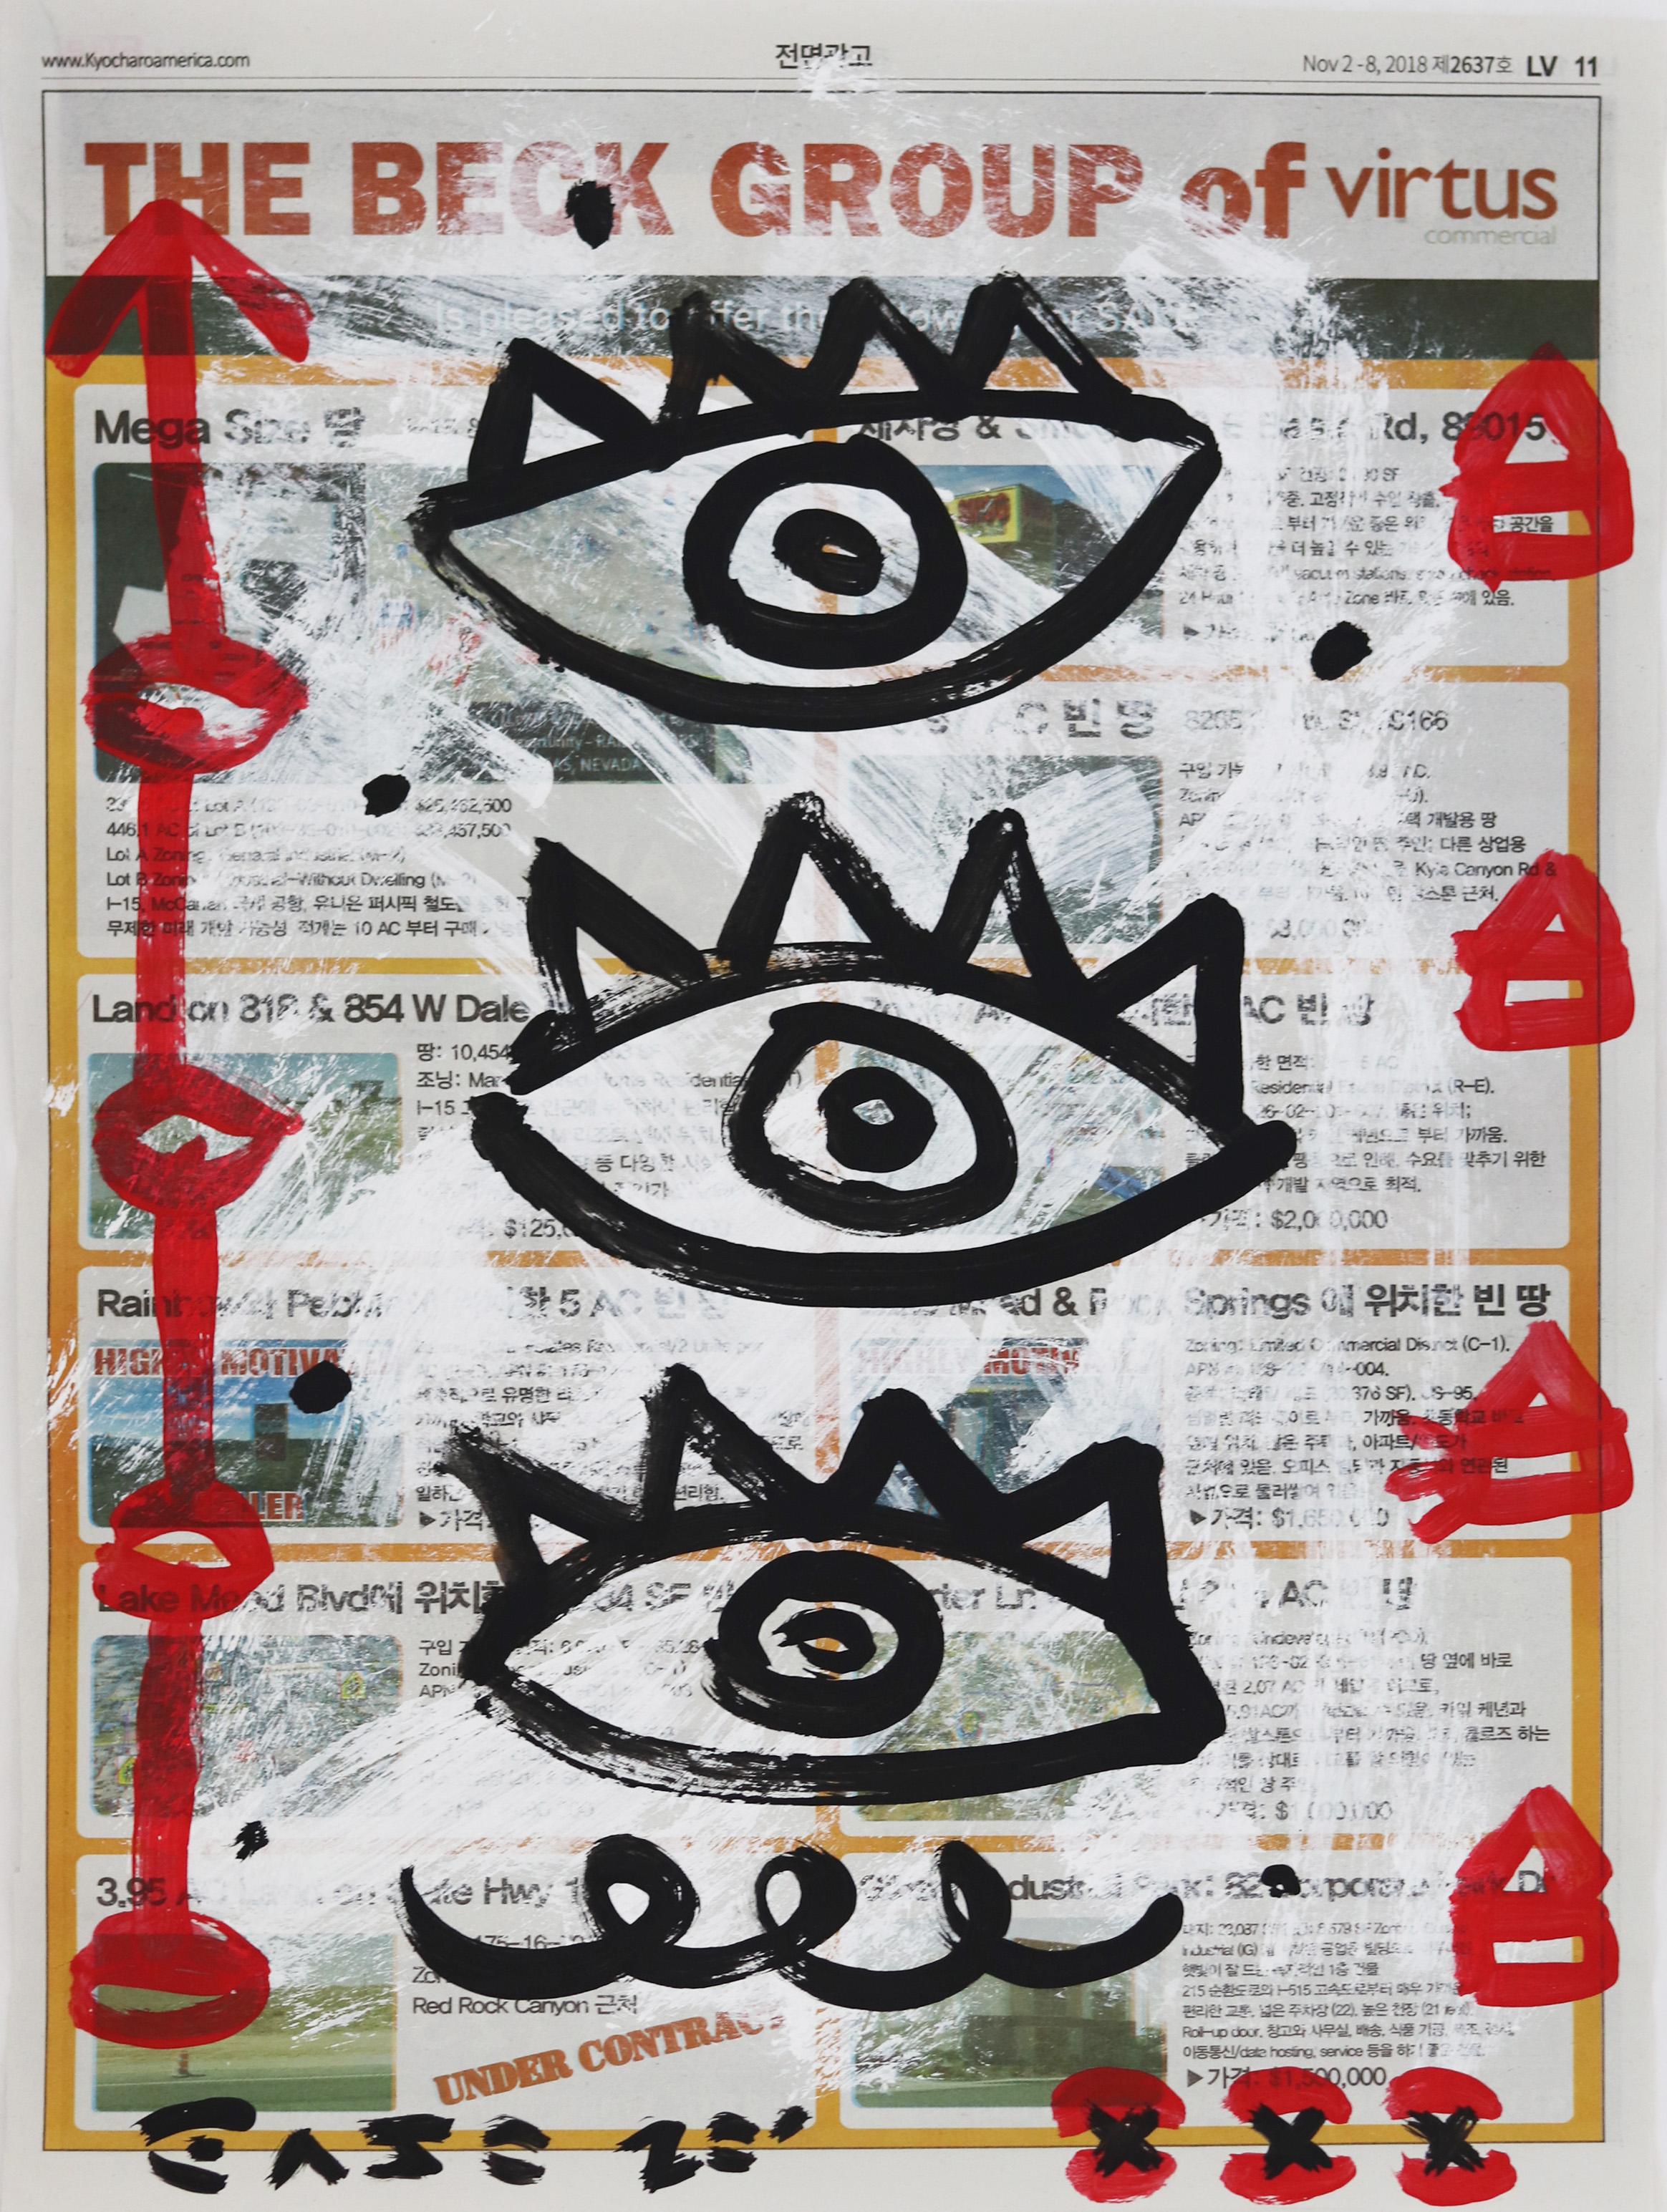 Gary John Figurative Painting - Third Eye Blind - Black and Red Original Street Art on Newsprint